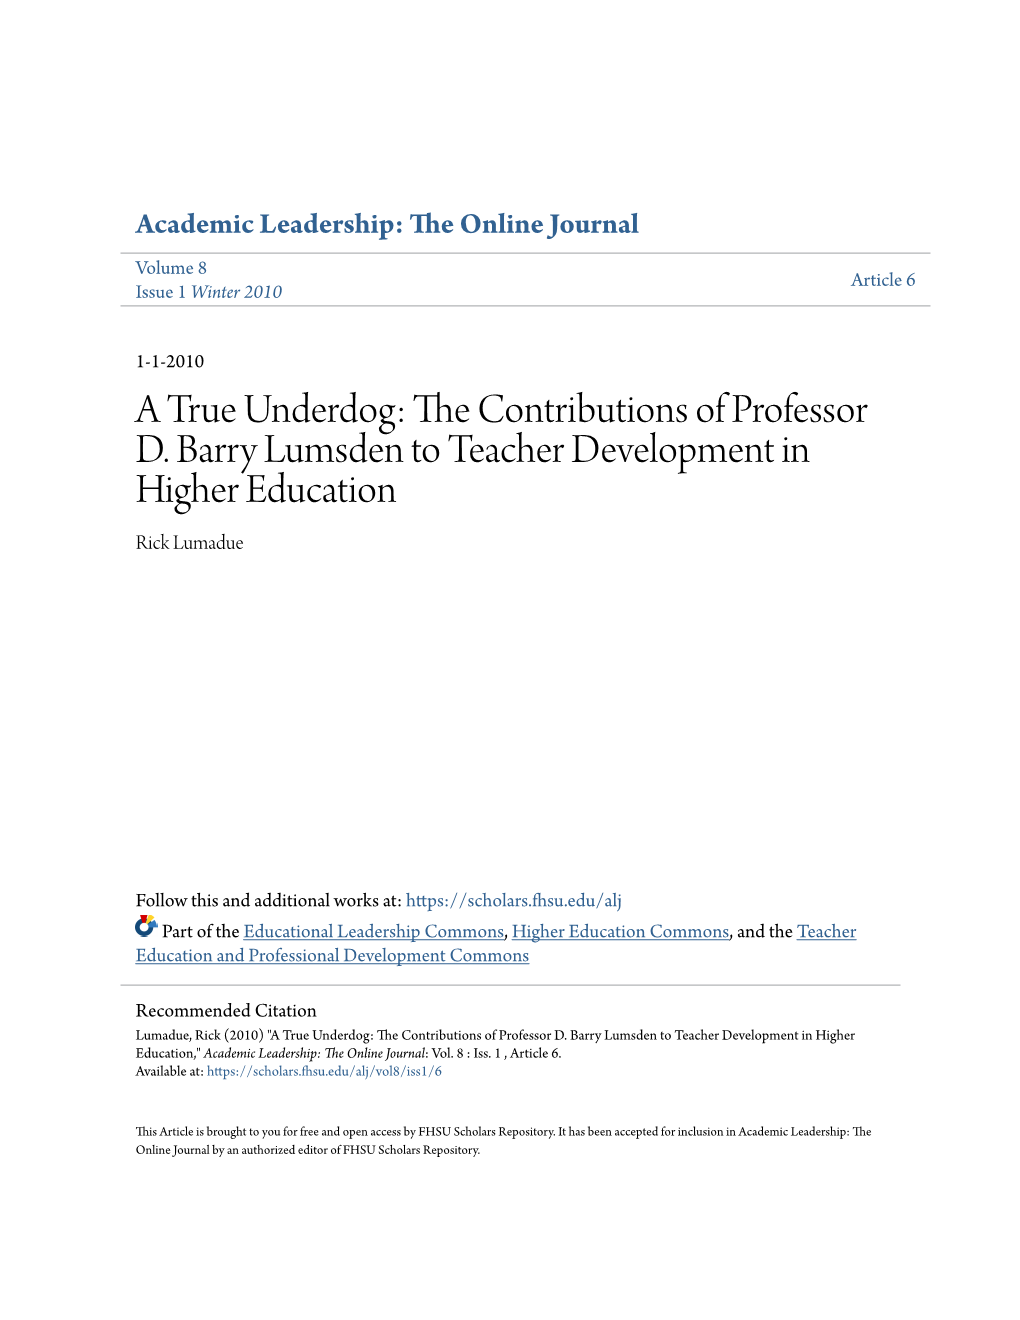 The Contributions of Professor D. Barry Lumsden to Teacher Development in Higher Education